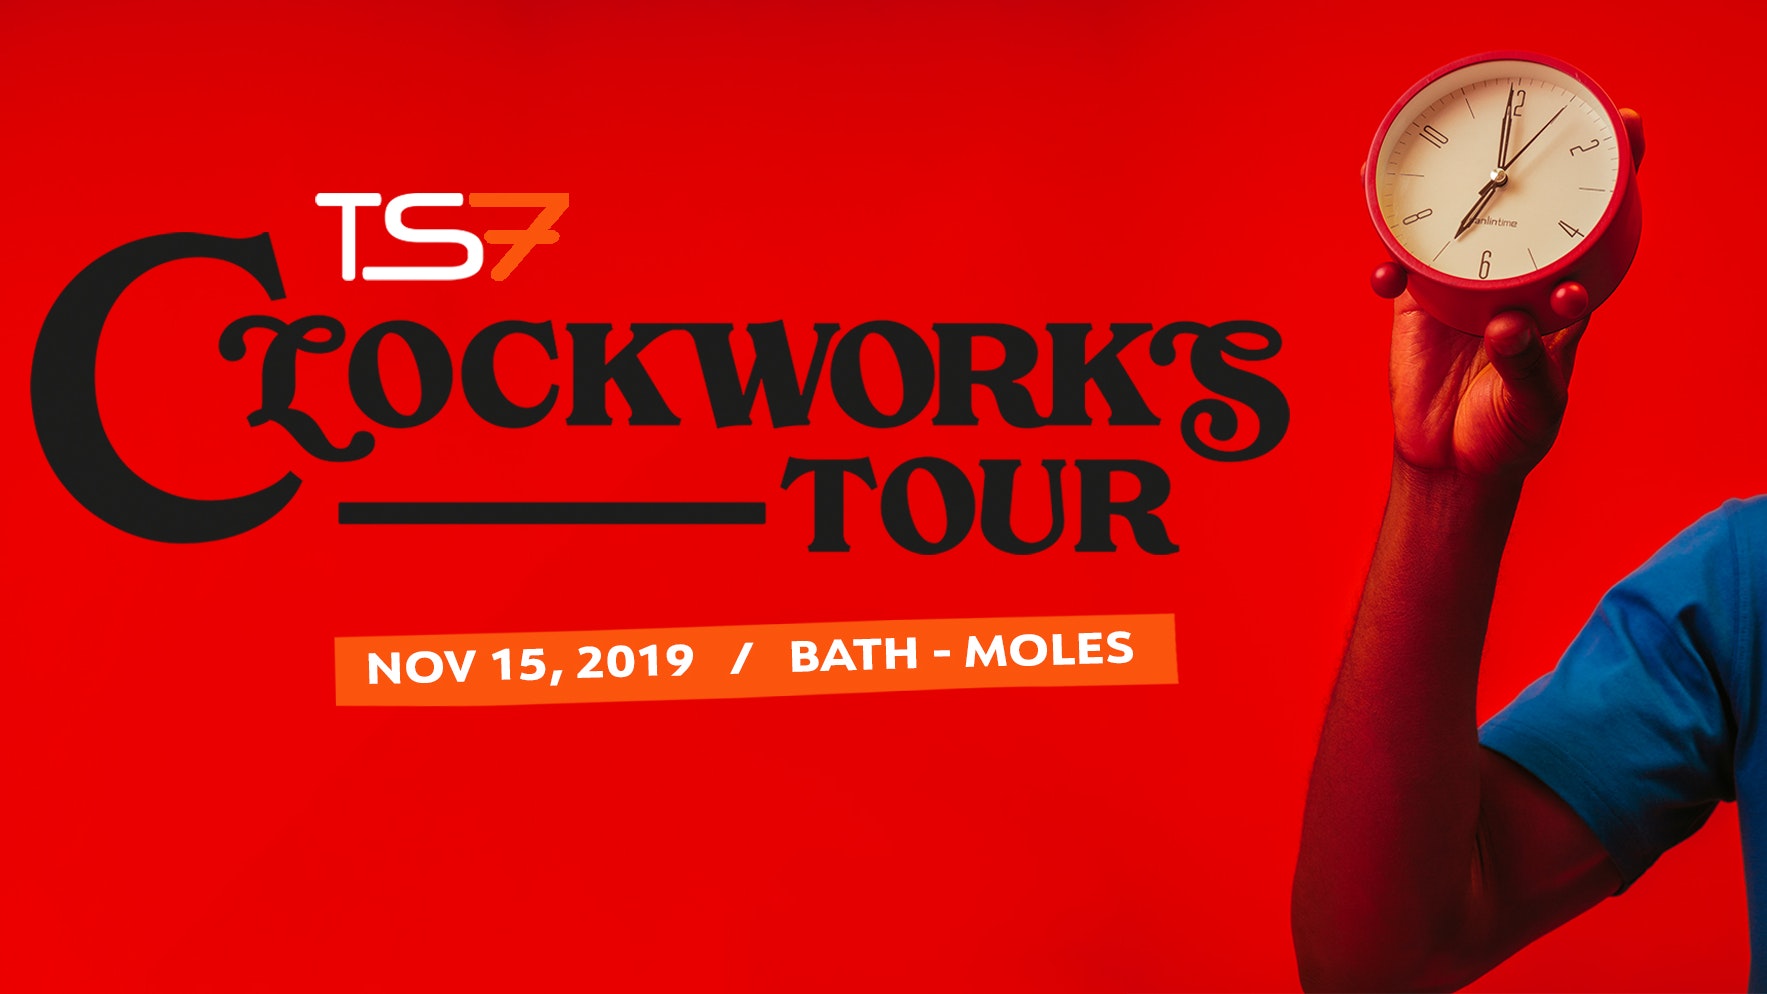 TS7: Clockworks UK Tour – Bath